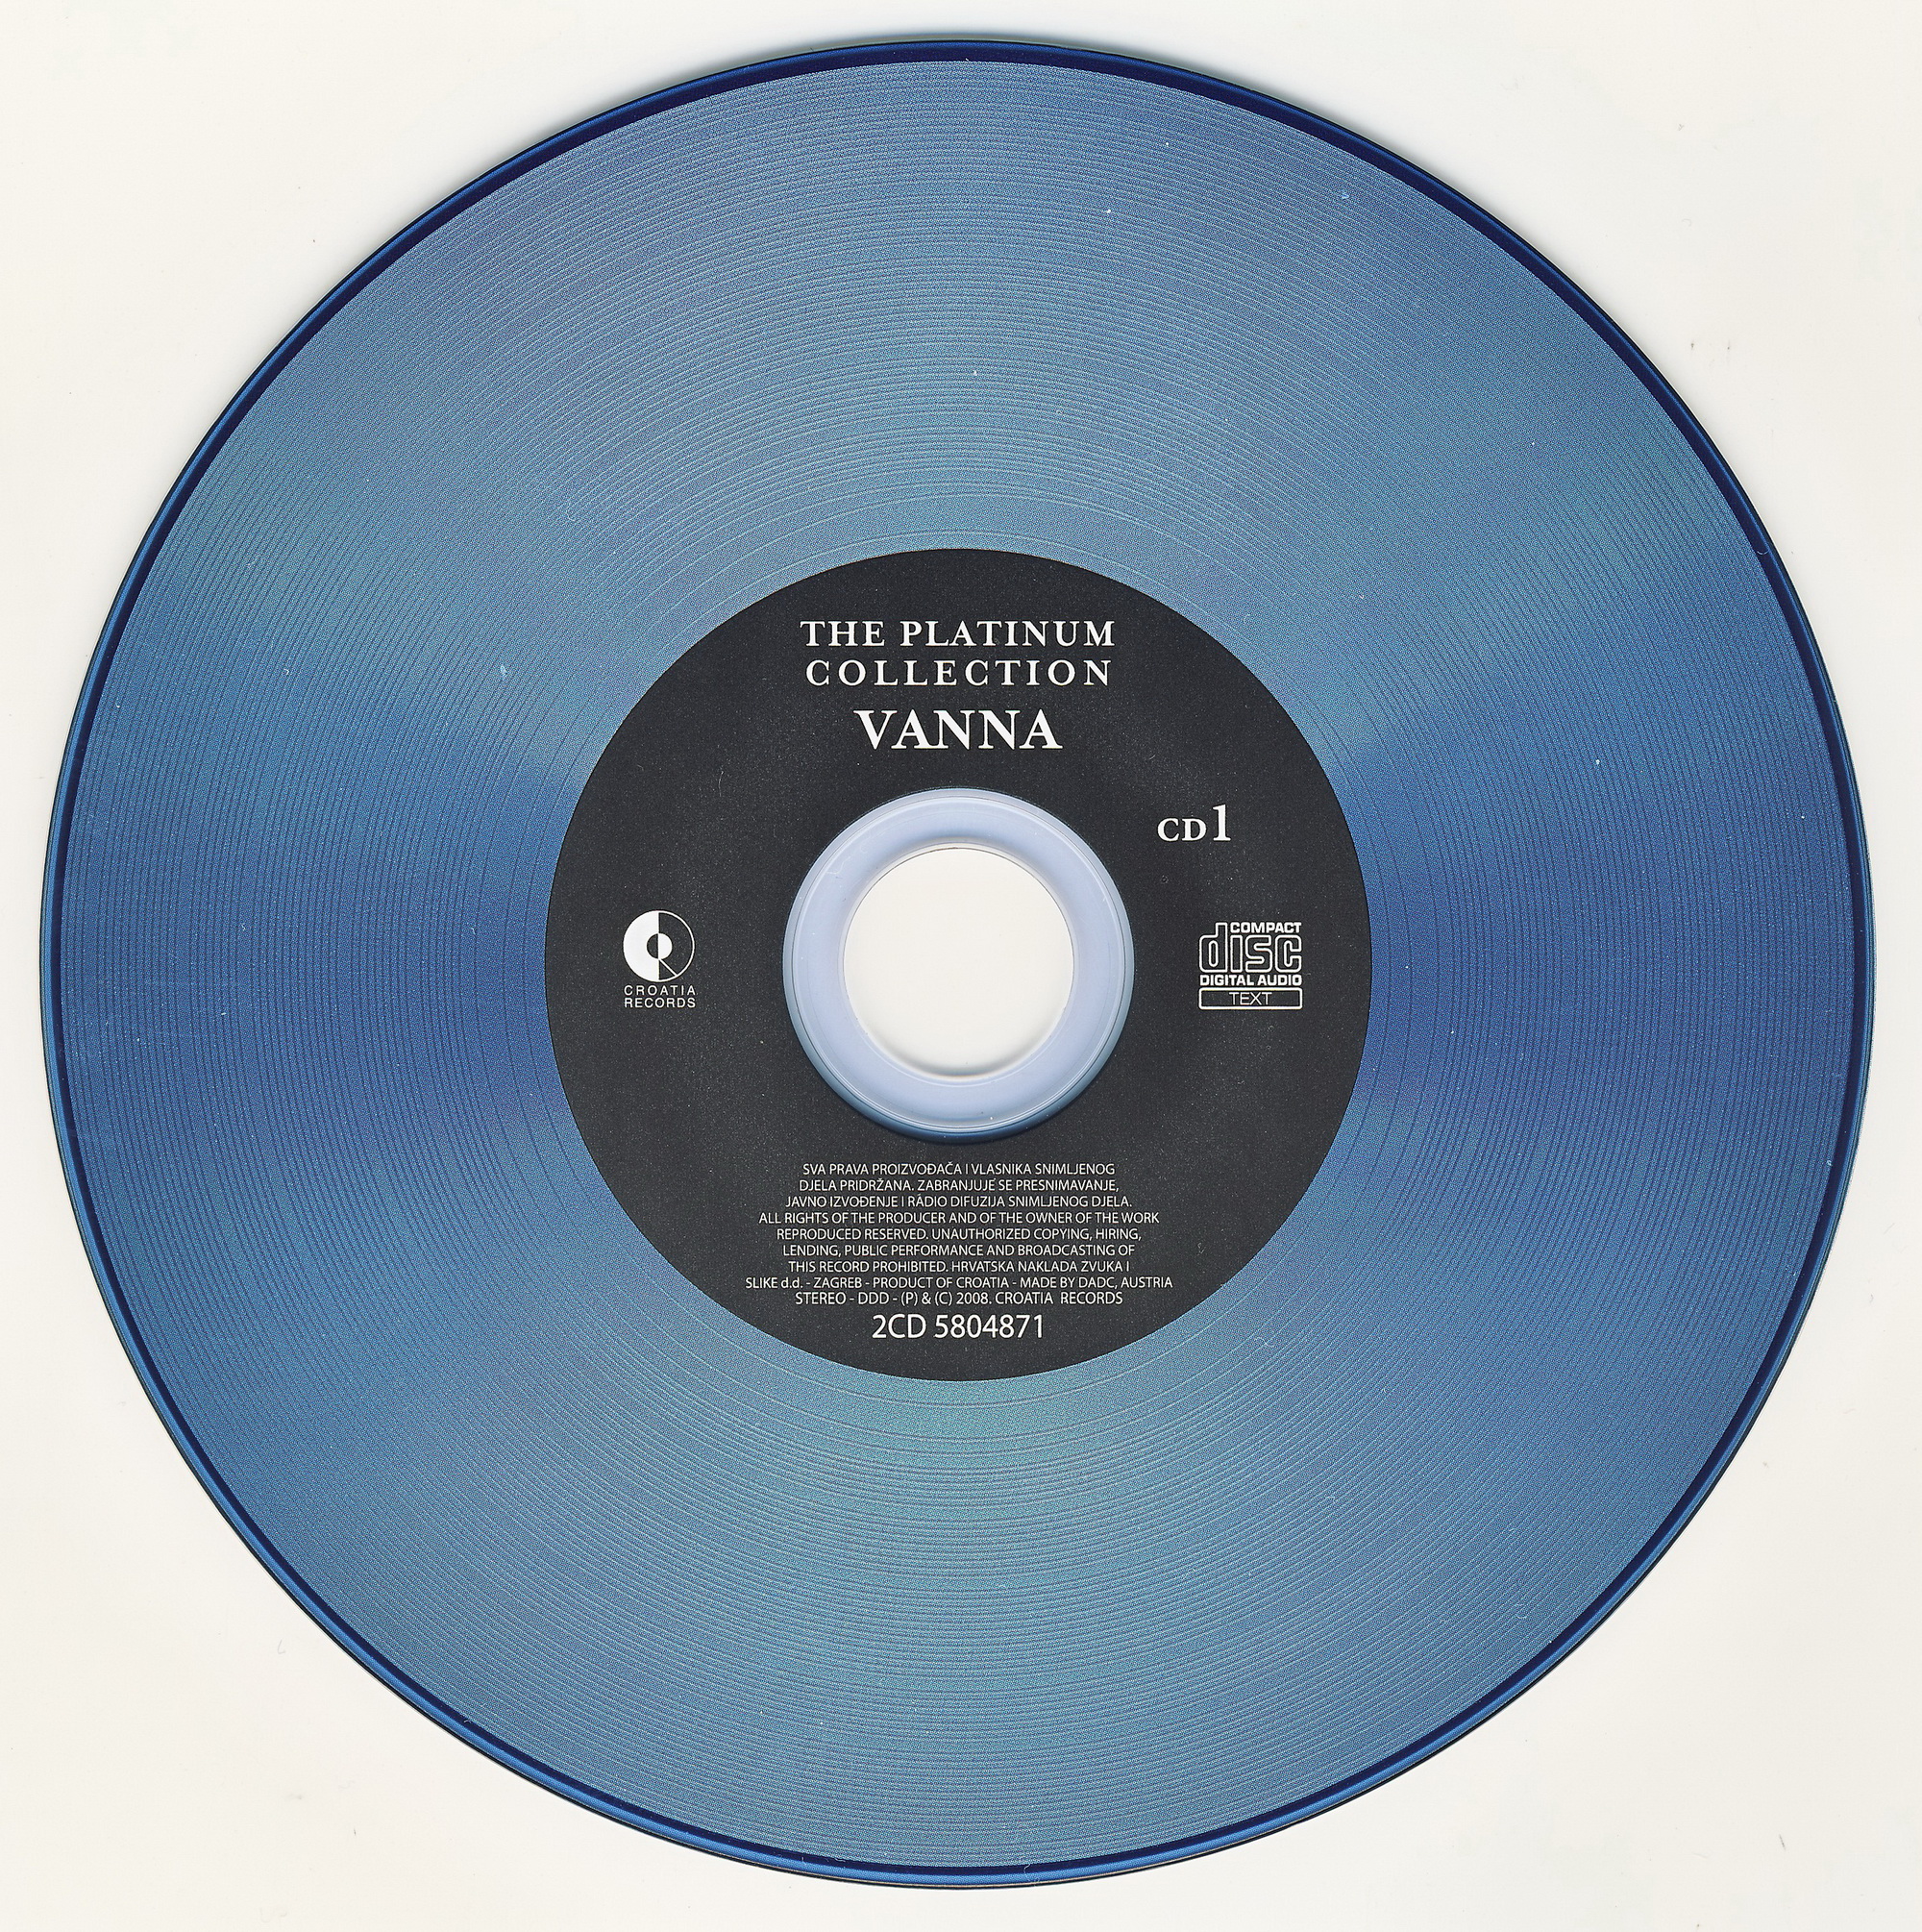 Vanna The Platinum collection 2008 cd 1